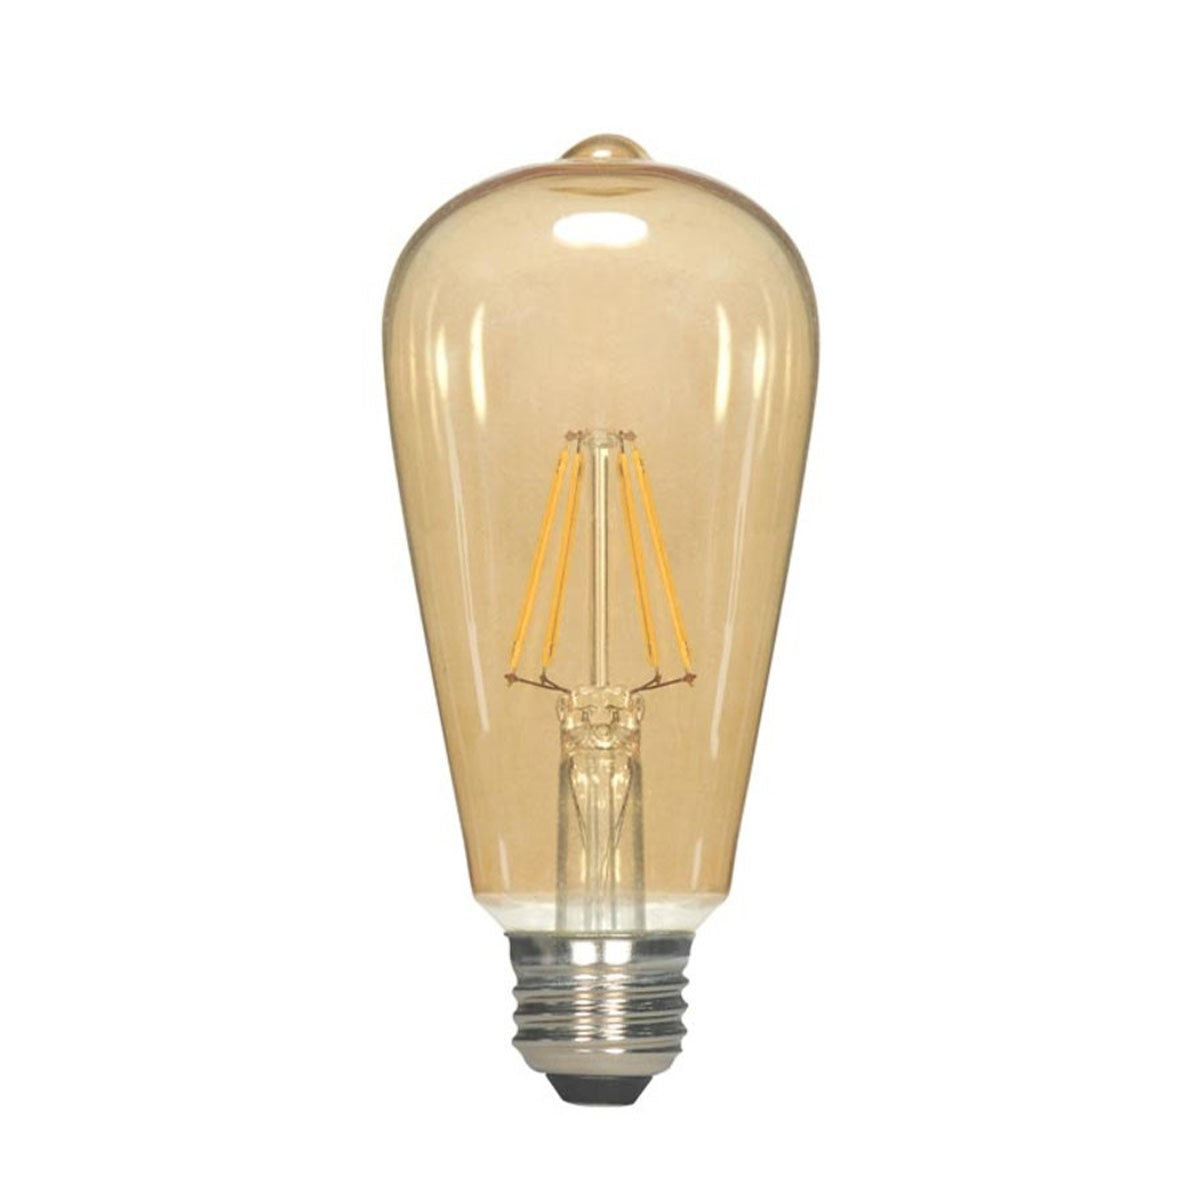 LED ST19 Straight Tapered Bulb, 5 Watt, 380 Lumens, 2000K, E26 Medium Base, Amber Finish